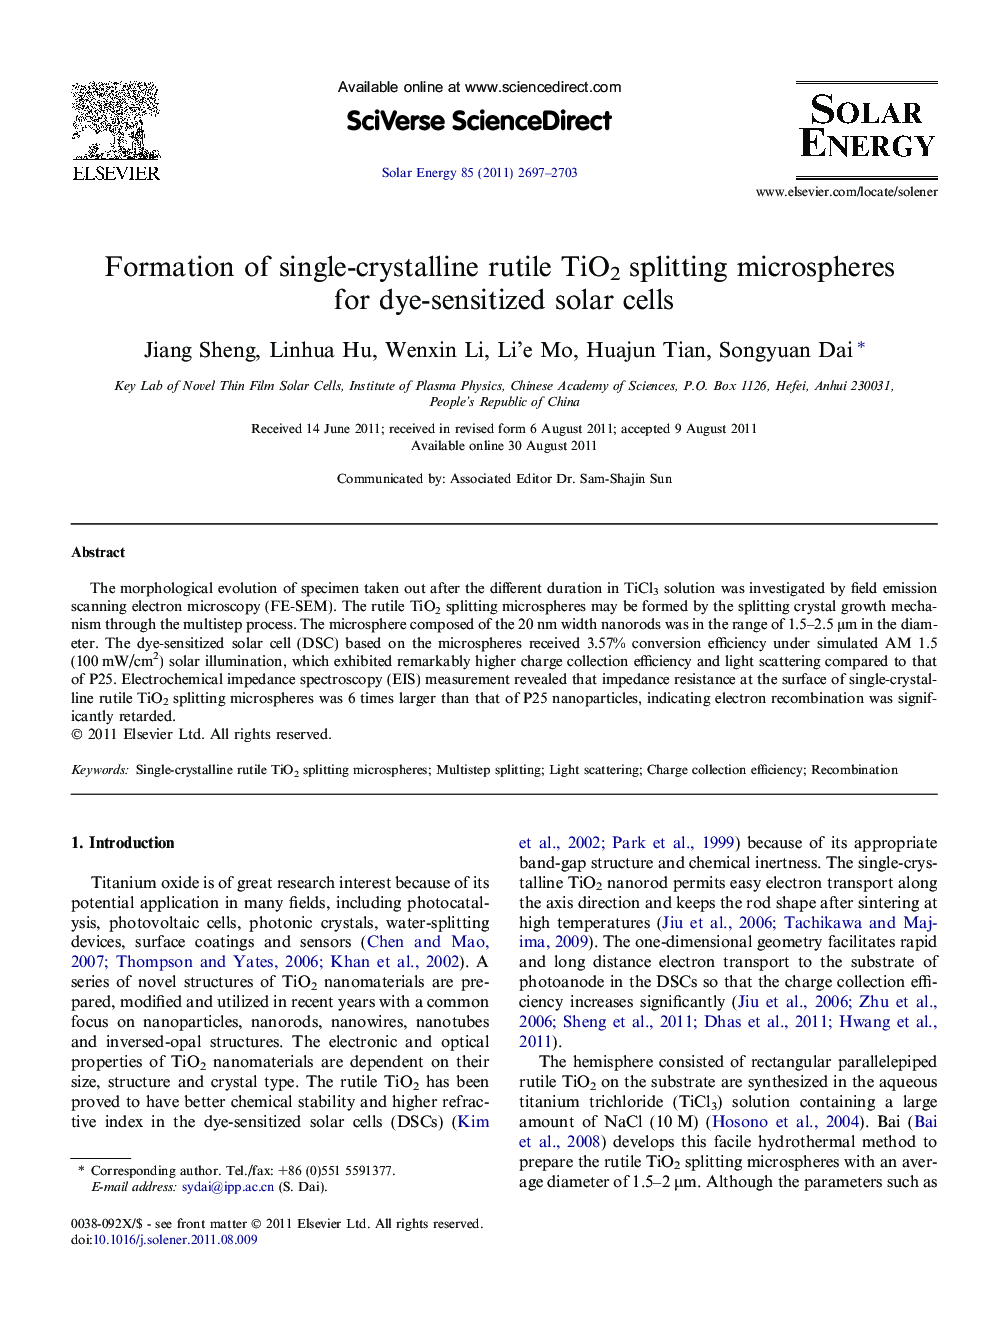 Formation of single-crystalline rutile TiO2 splitting microspheres for dye-sensitized solar cells